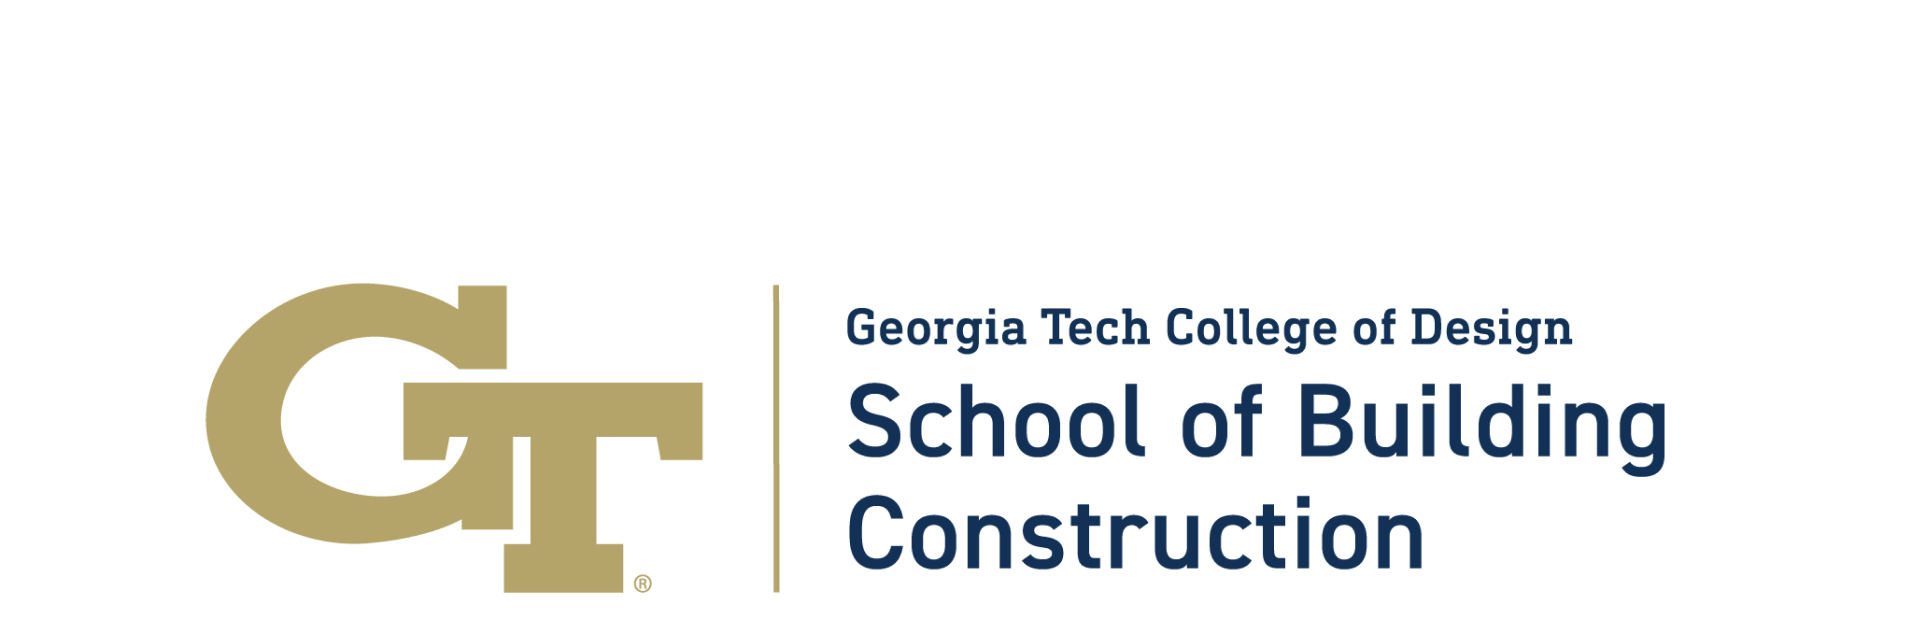 Georgia Tech School of Building Construction